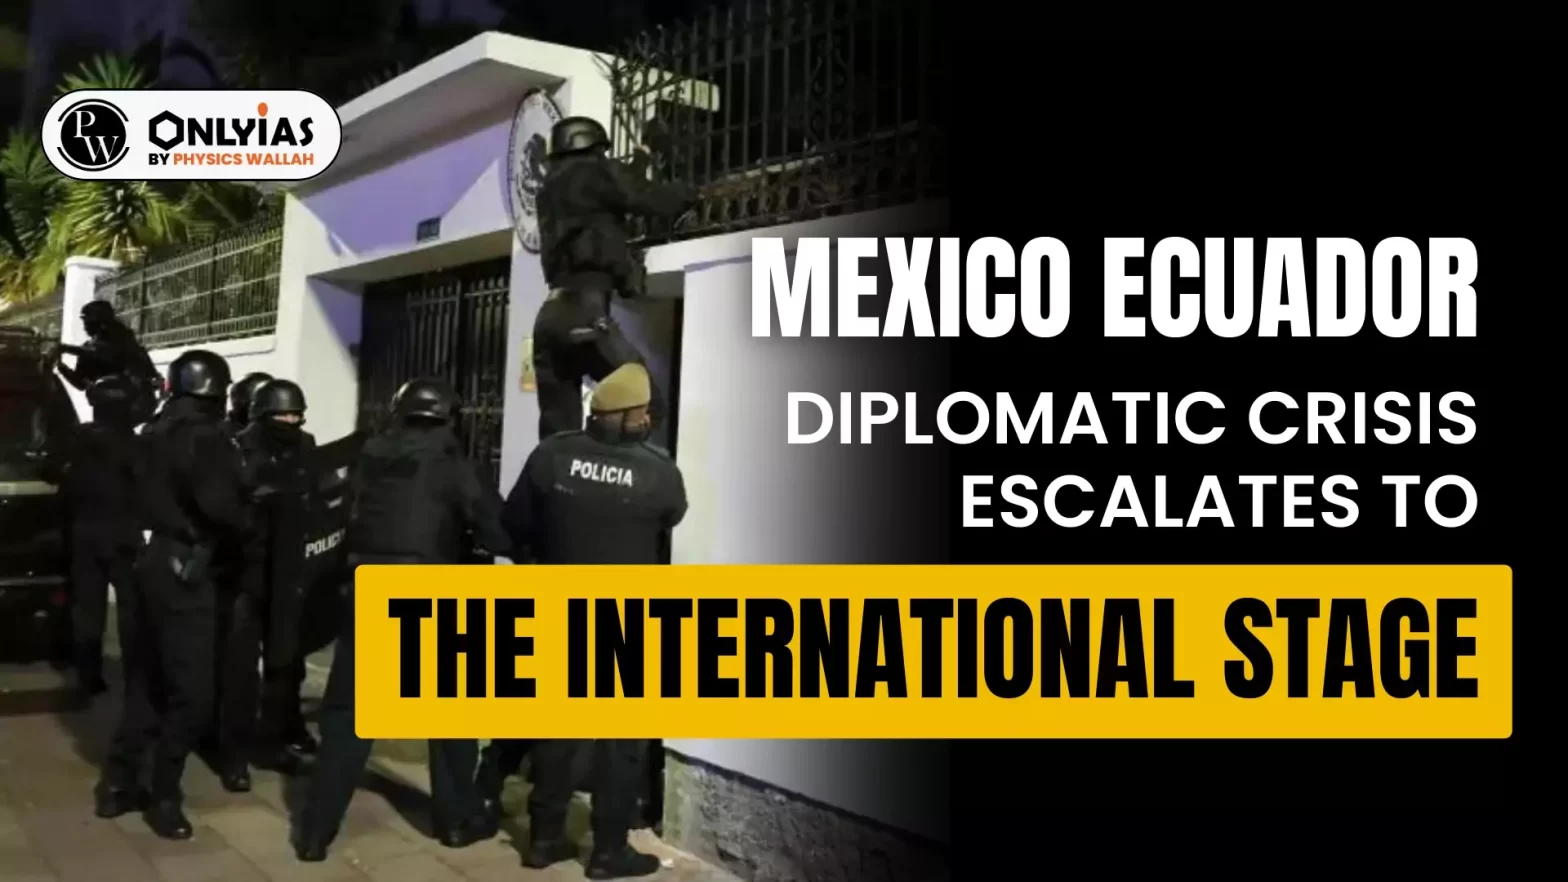 Mexico Ecuador Diplomatic Crisis Escalates to the International Stage